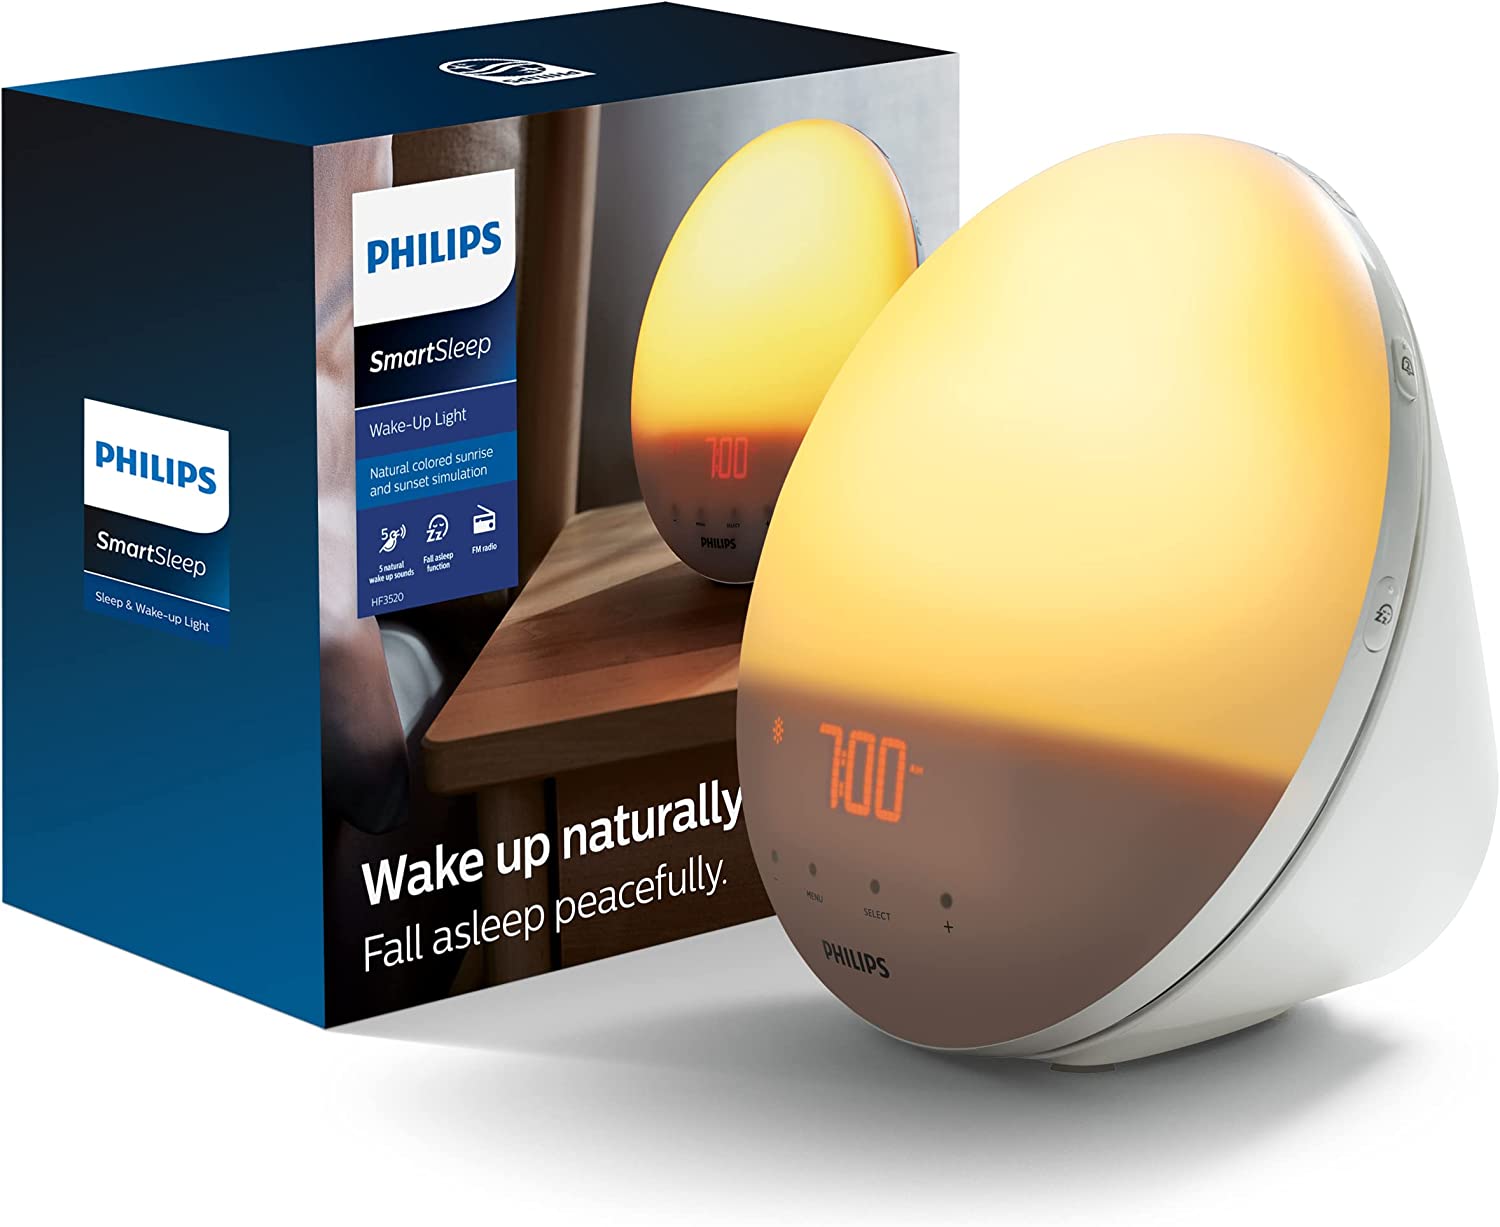 Philips Personalized Alarm